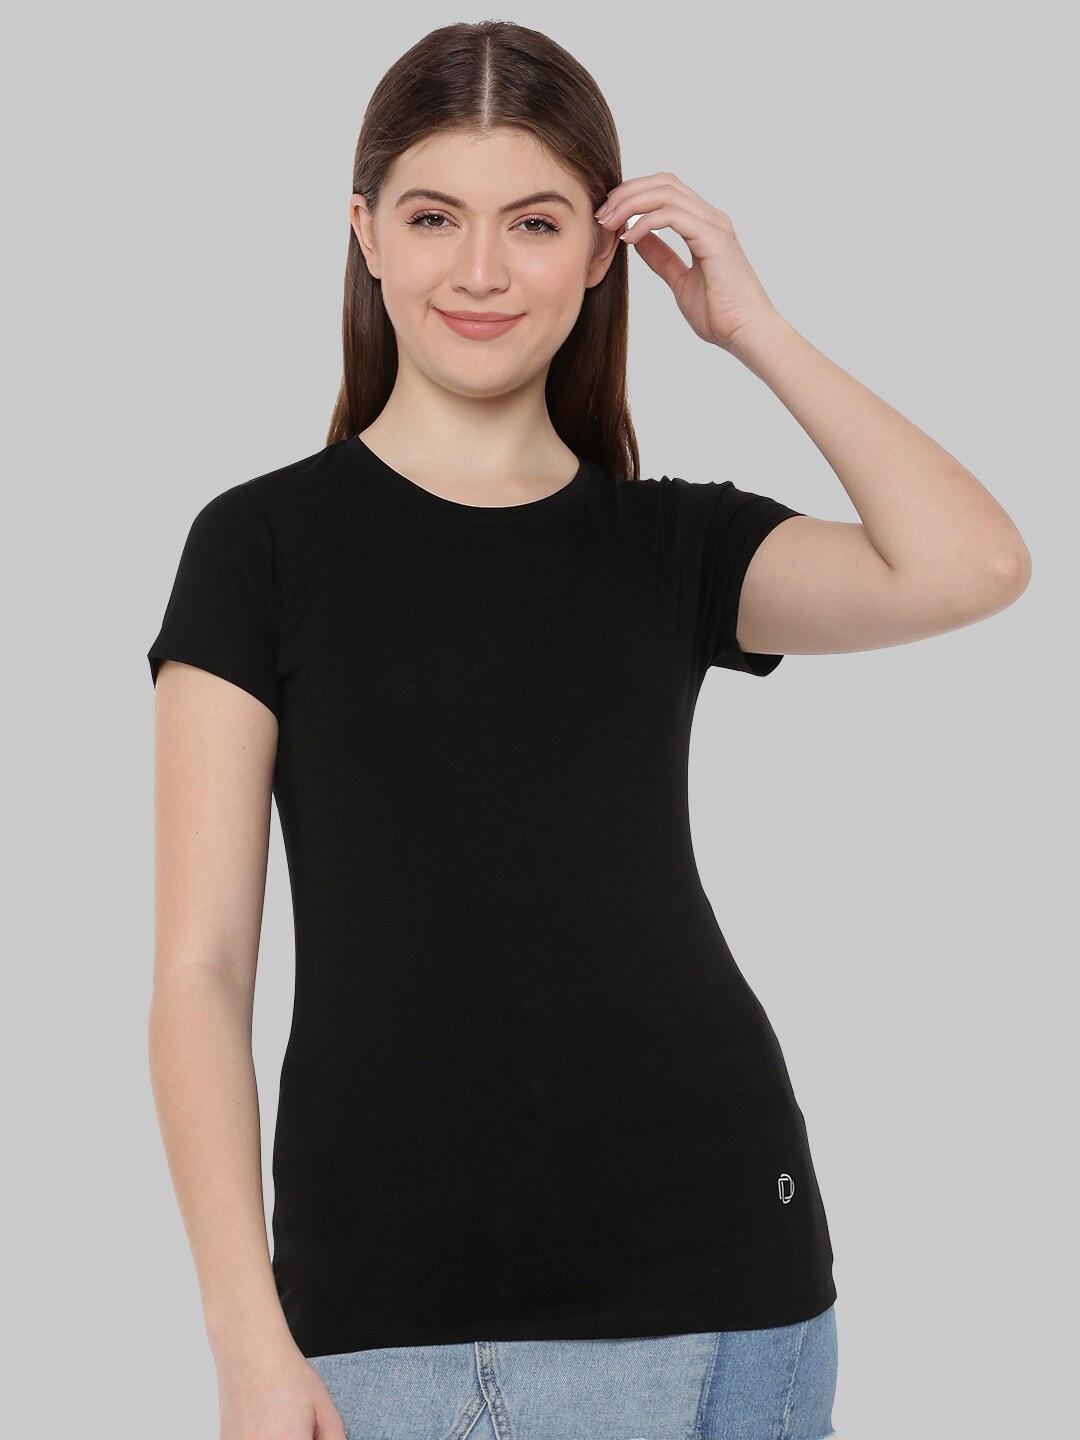 dollar-missy-women-black-anti-odour-slim-fit-t-shirt